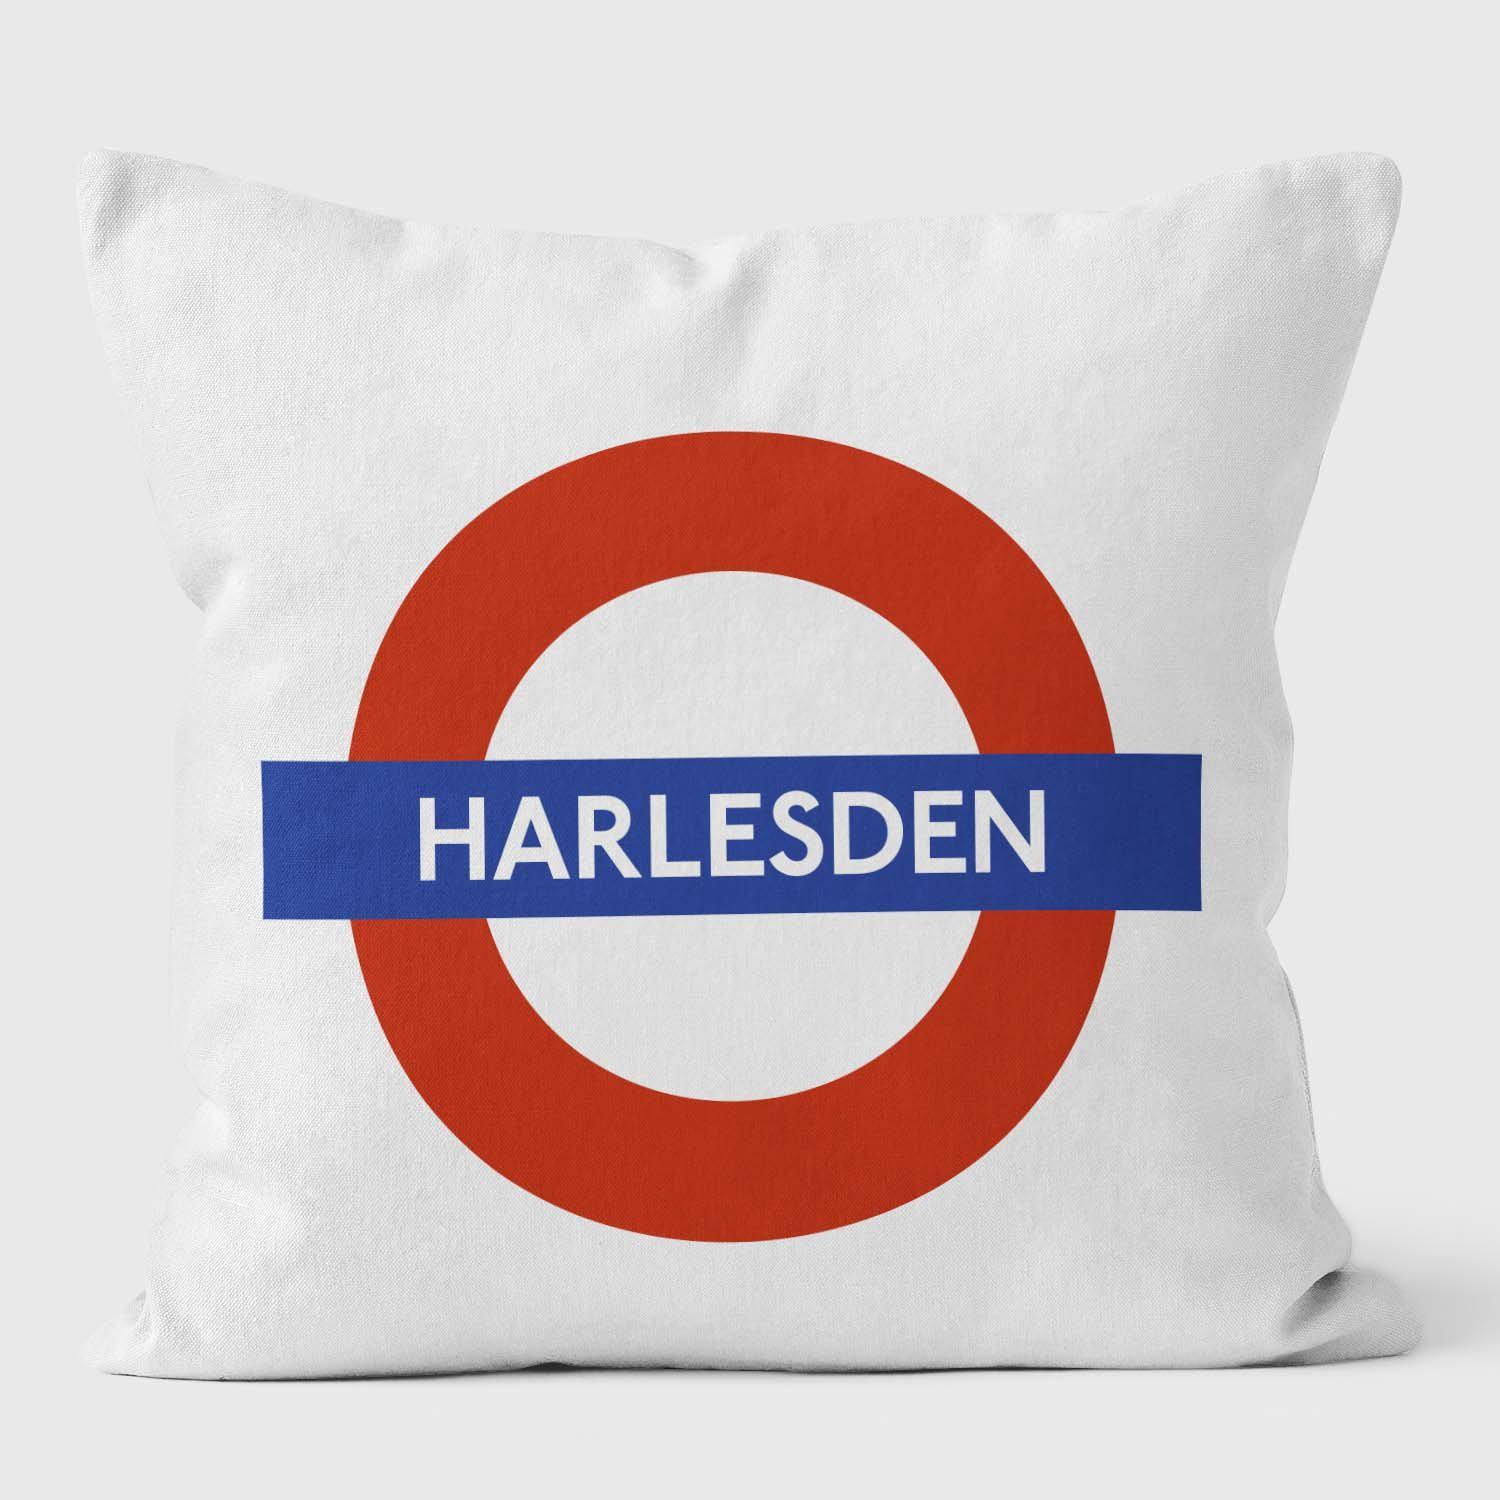 Harlesden London Underground Tube Station Roundel Cushion - Handmade Cushions UK - WeLoveCushions